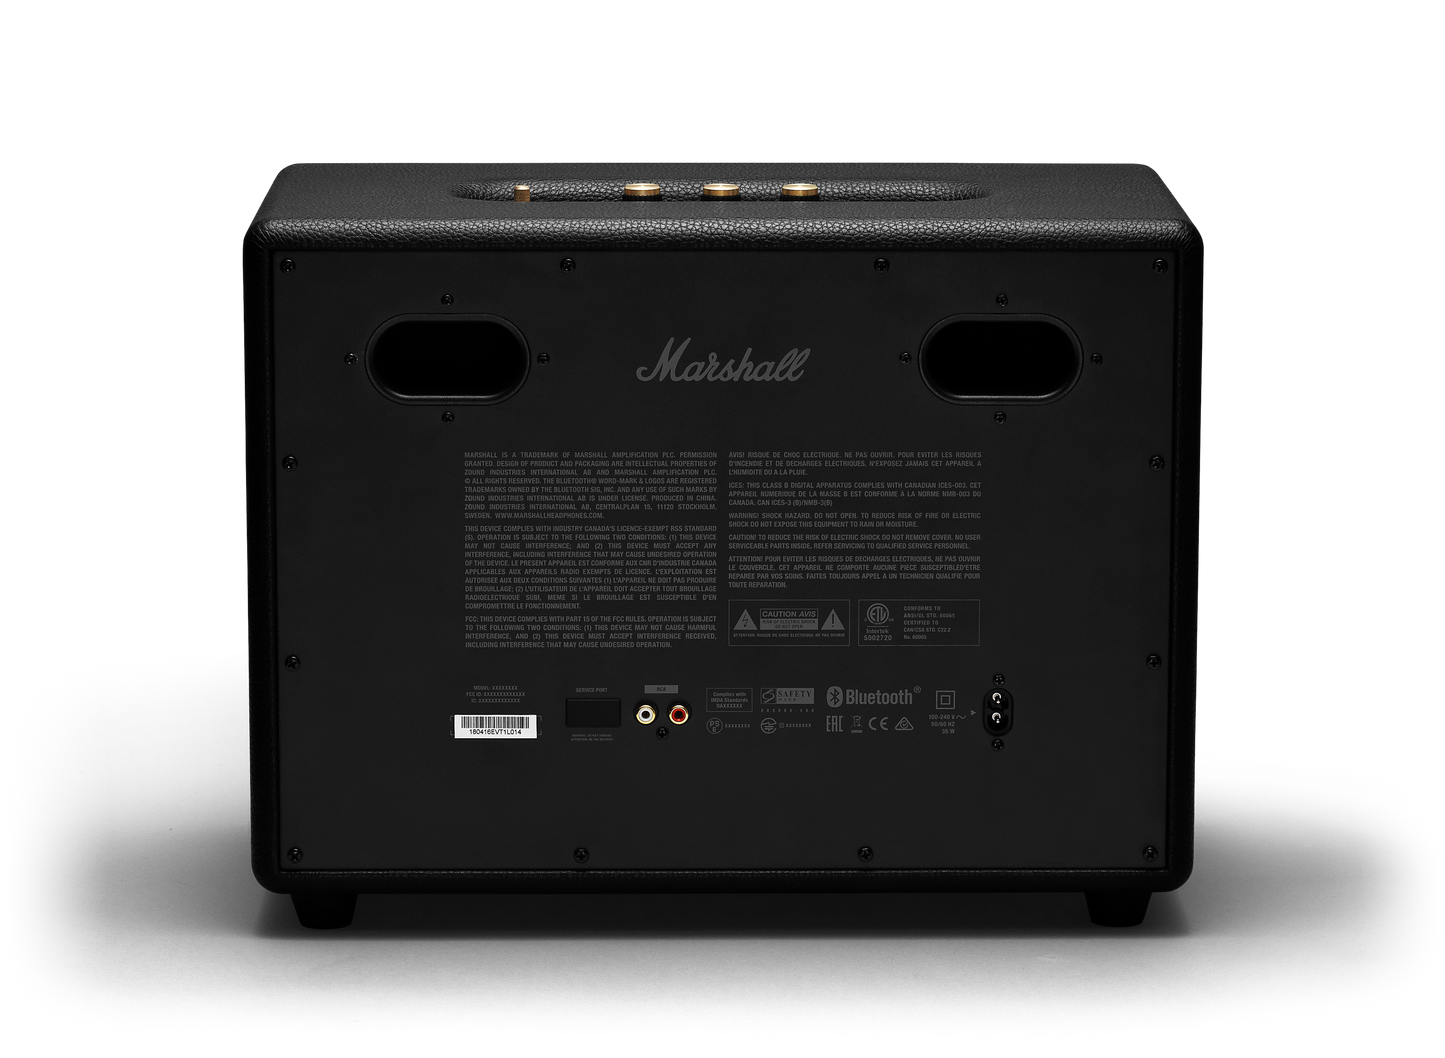 Marshall Woburn 2 Powered Bt Speaker Black